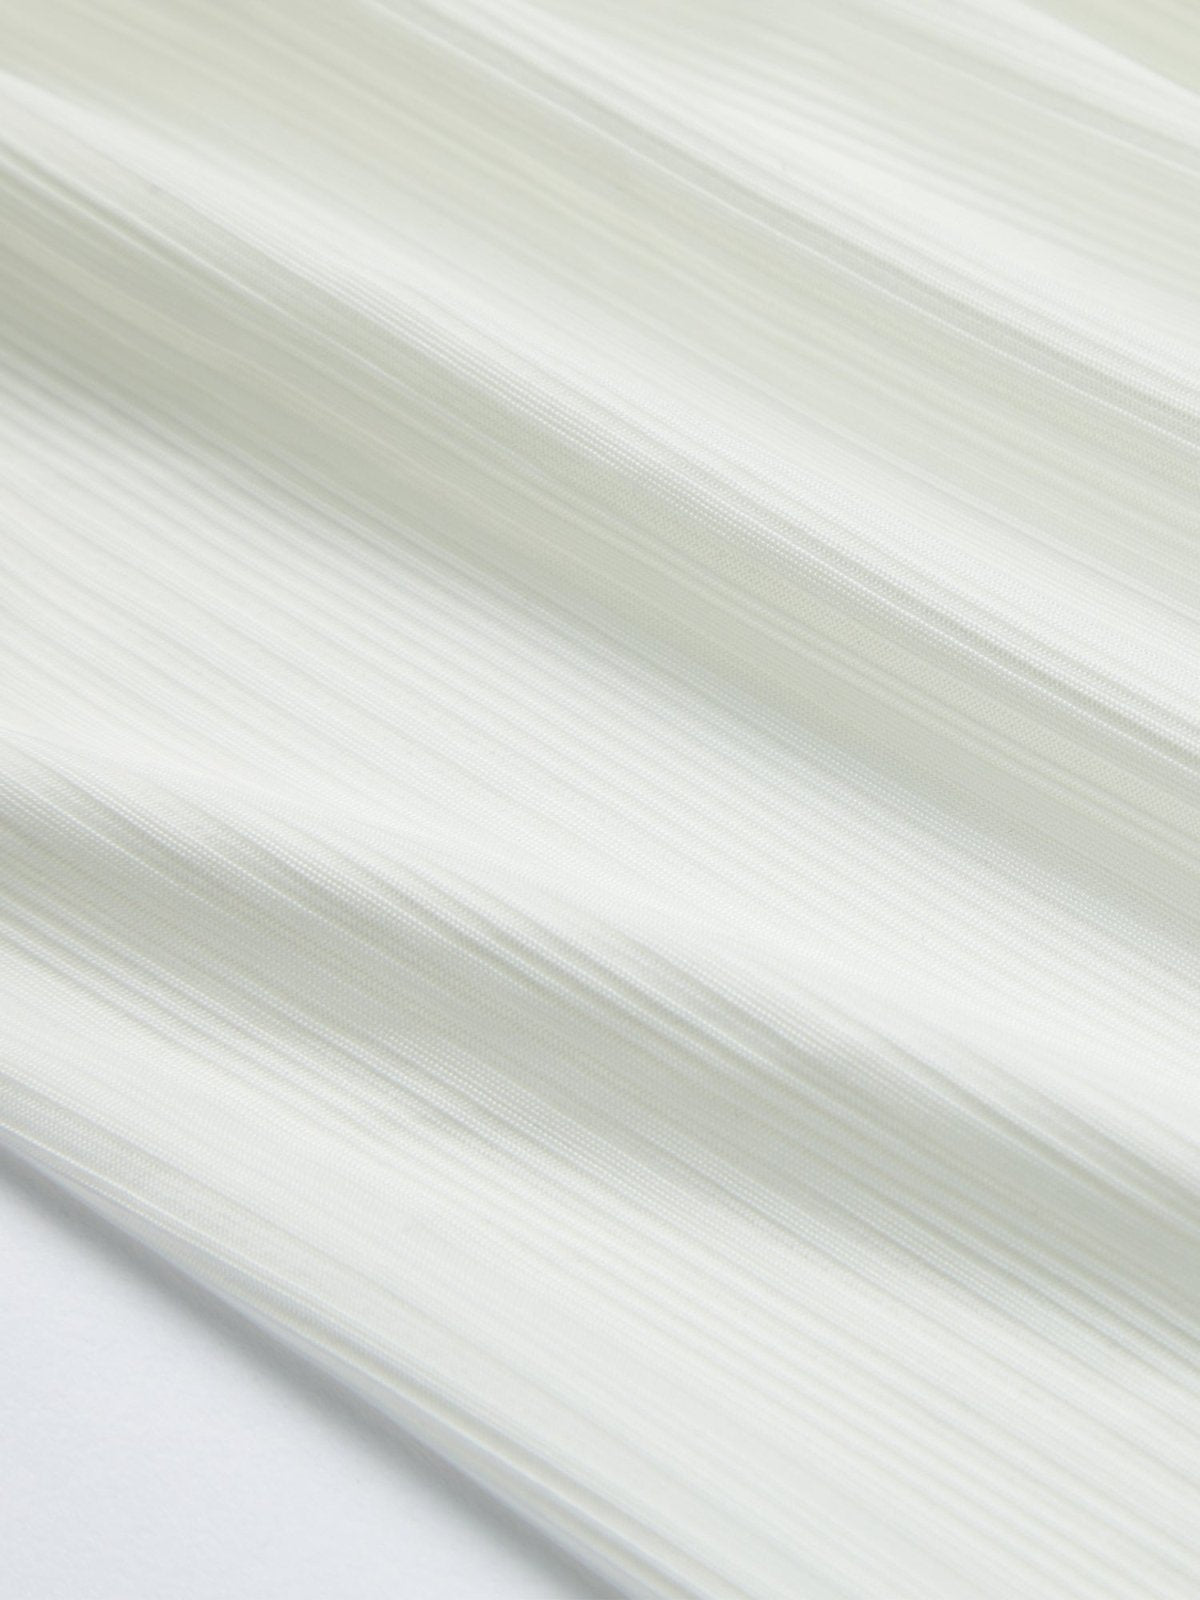 Ribbed Slip Shorts - DAG-8-9585-22MarshmallowWhiteF - Marshmallow White - F - D'ZAGE Designs